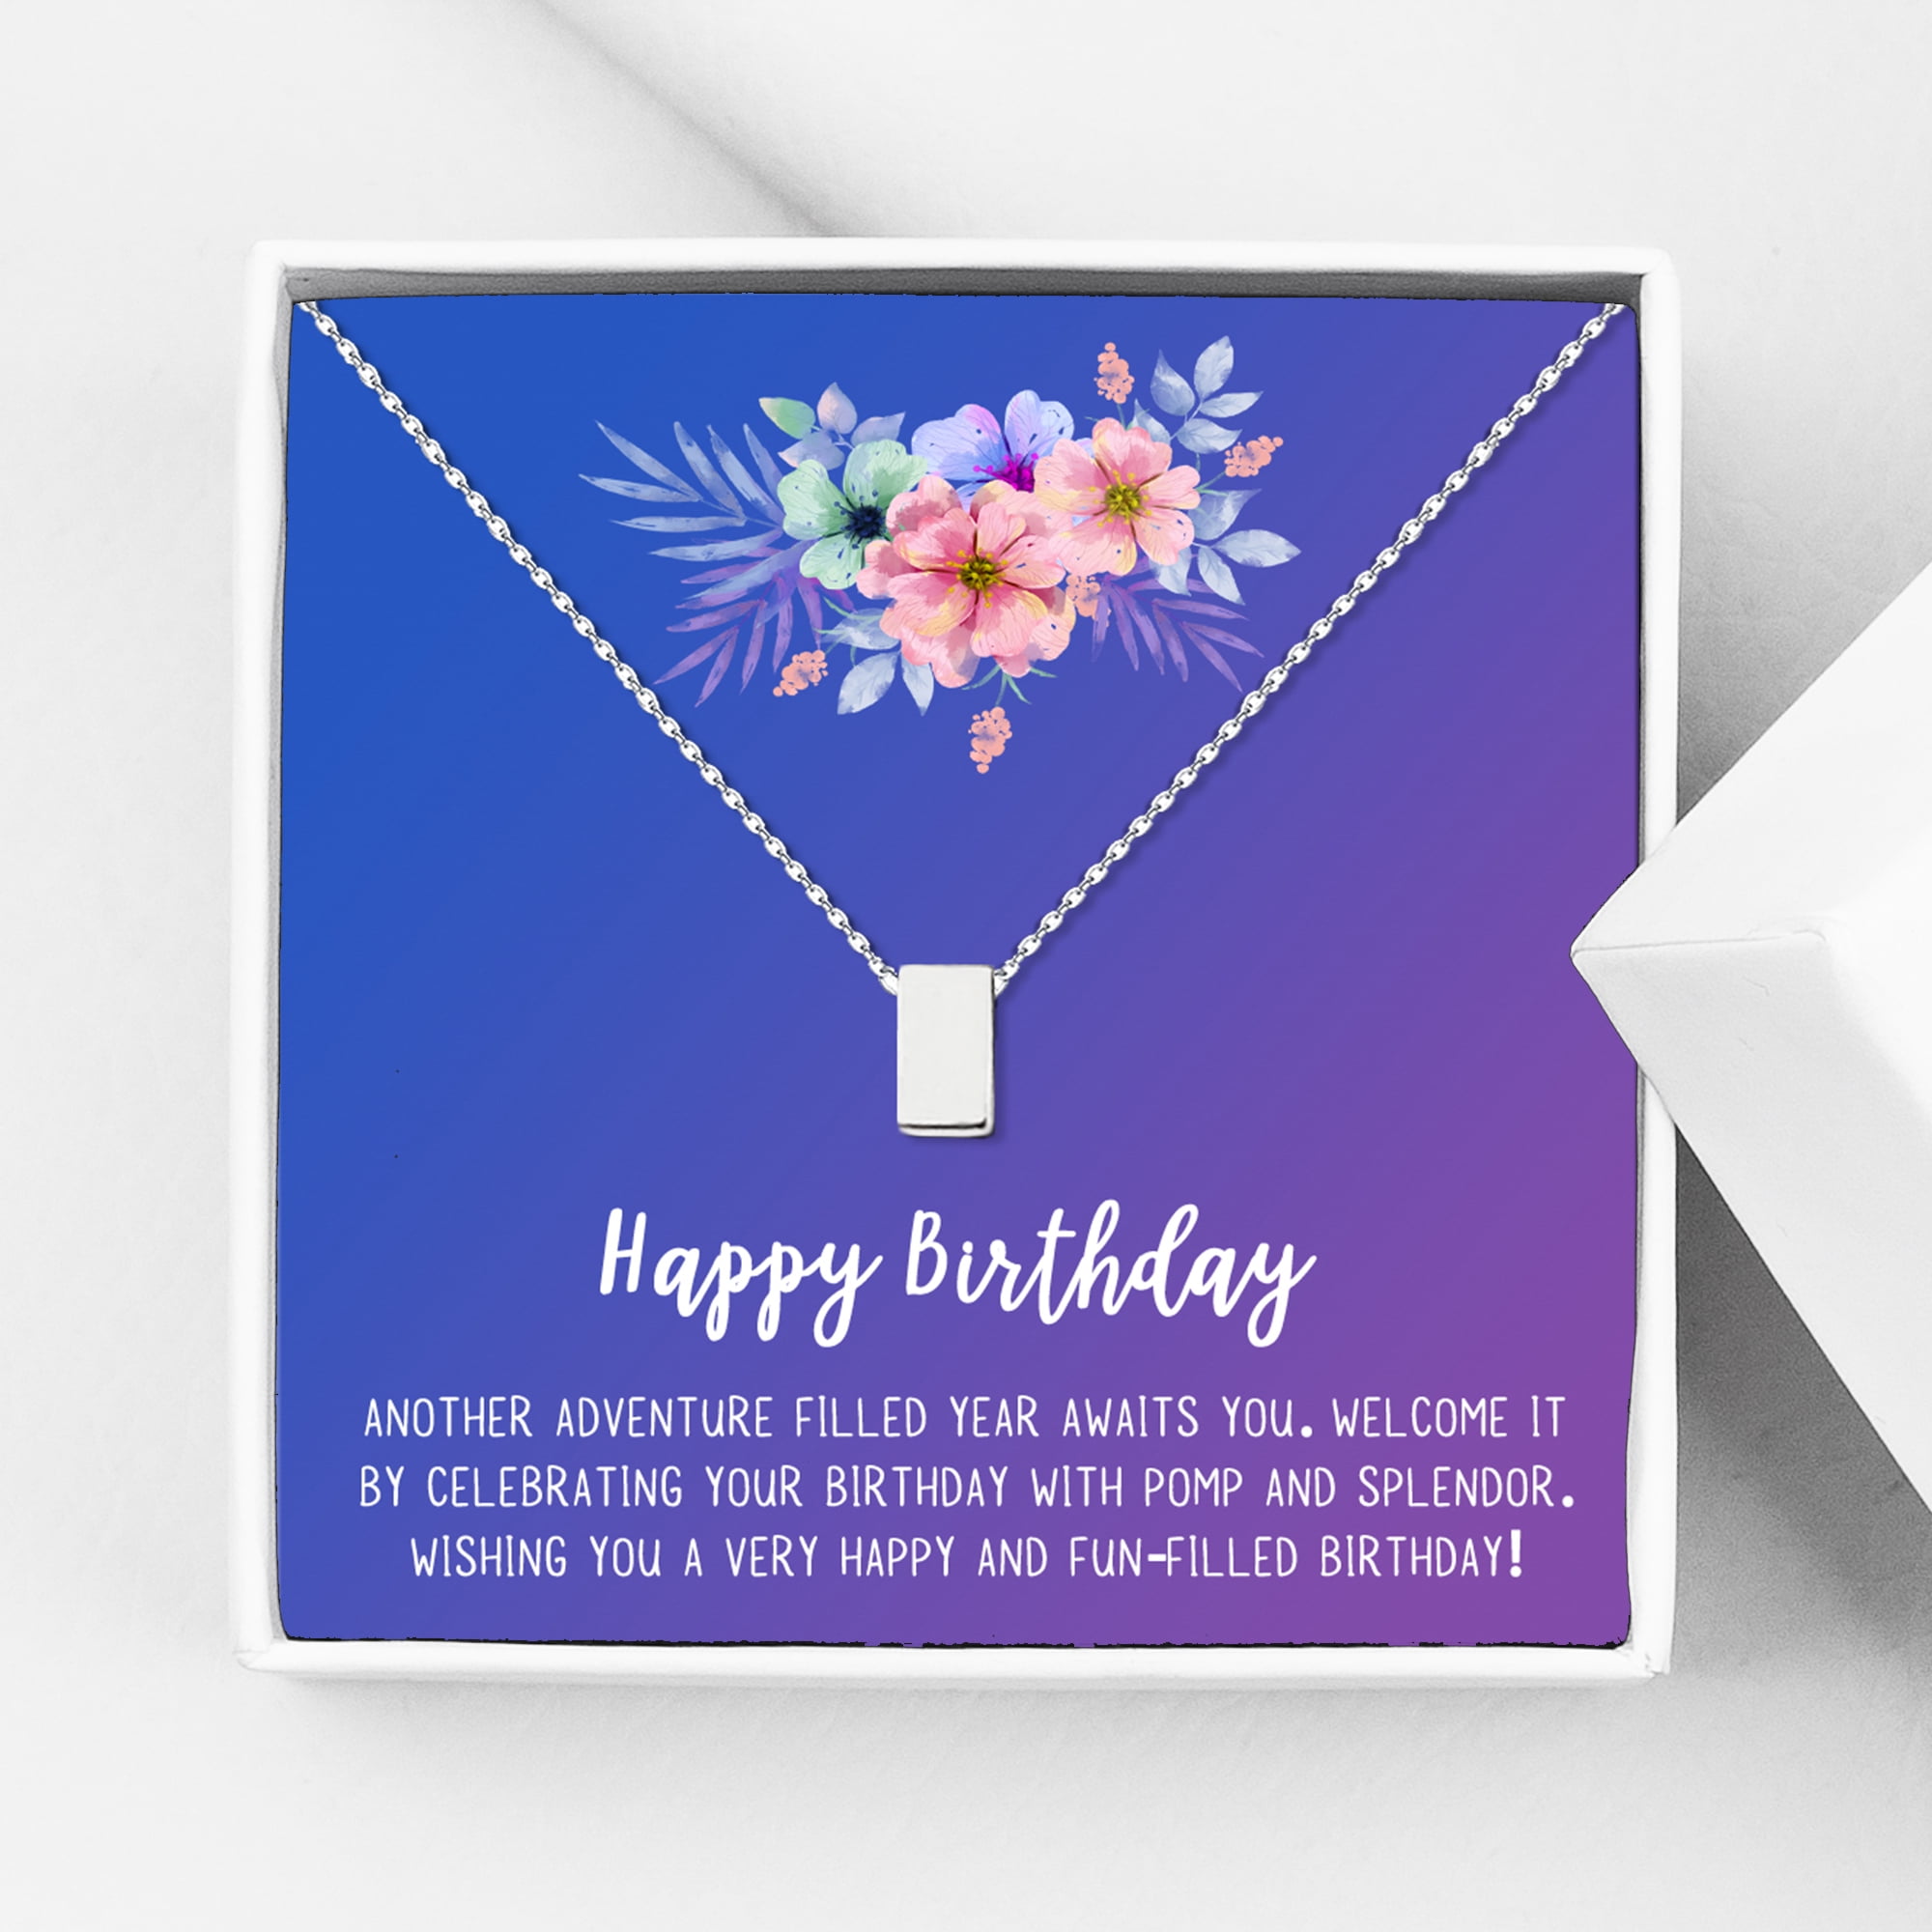 Fiftieth Birthday Gift to Her Birthday Jewelry Necklace 50th Birthday Necklace Gift Love Knot. Happy 50th Birthday Gift for Women Friend